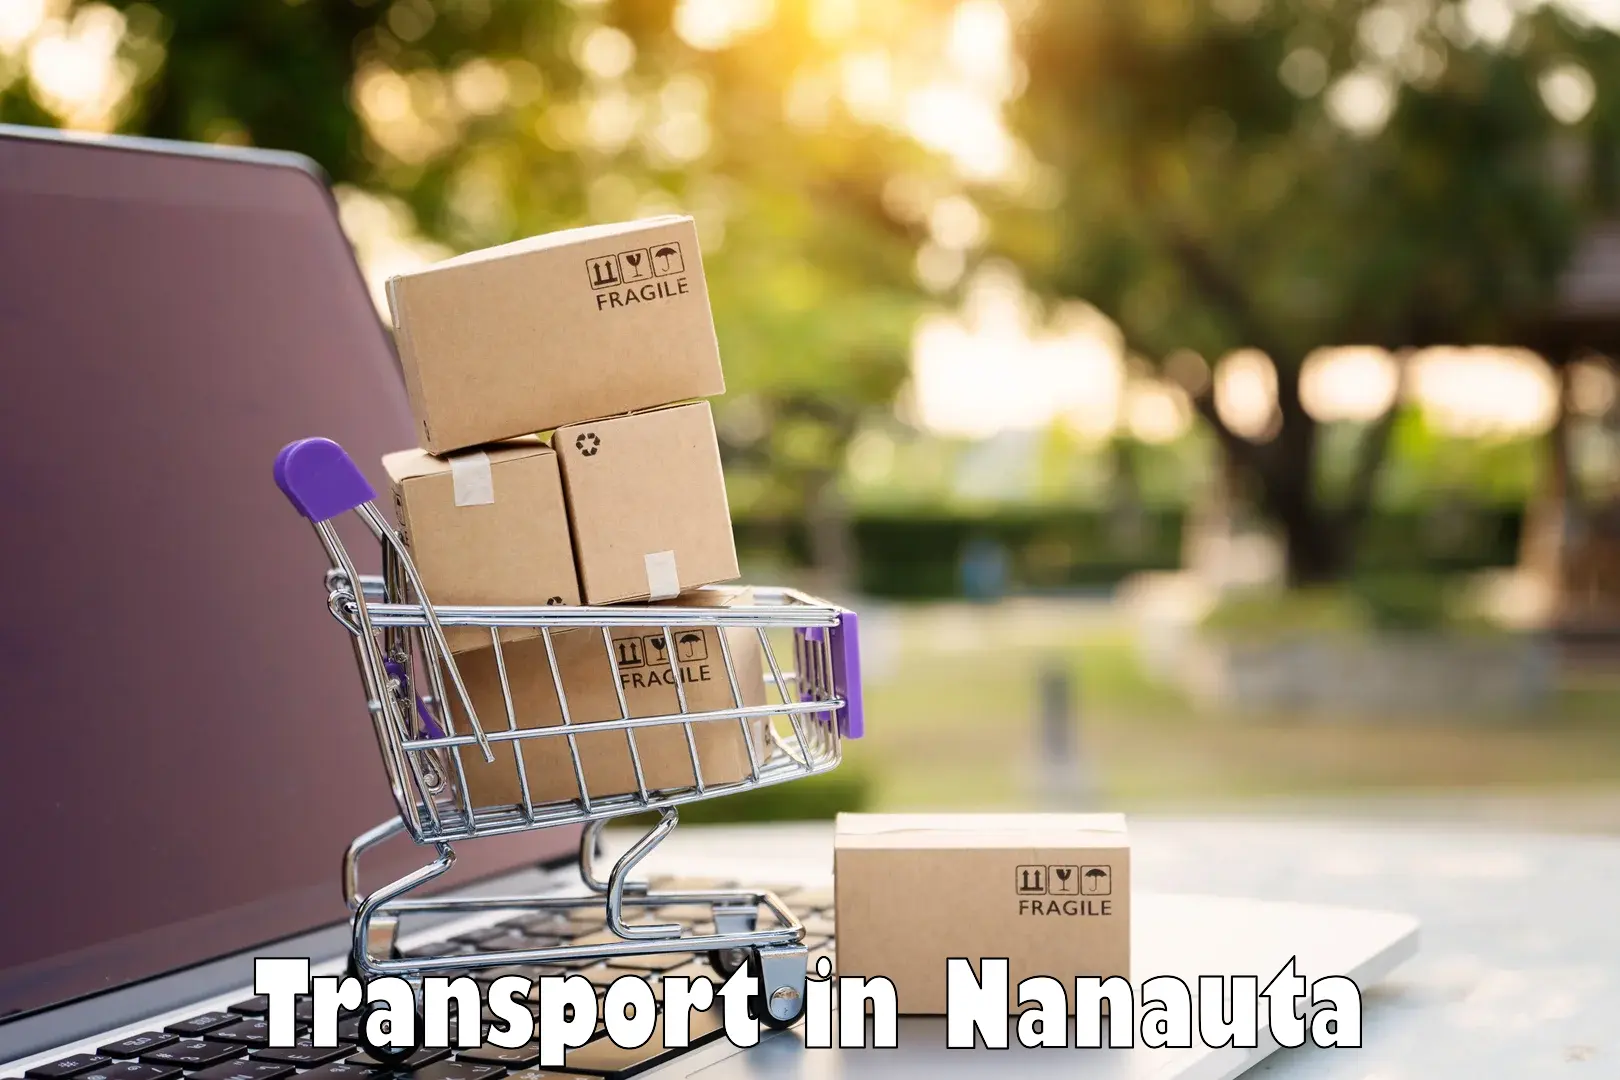 Pick up transport service in Nanauta